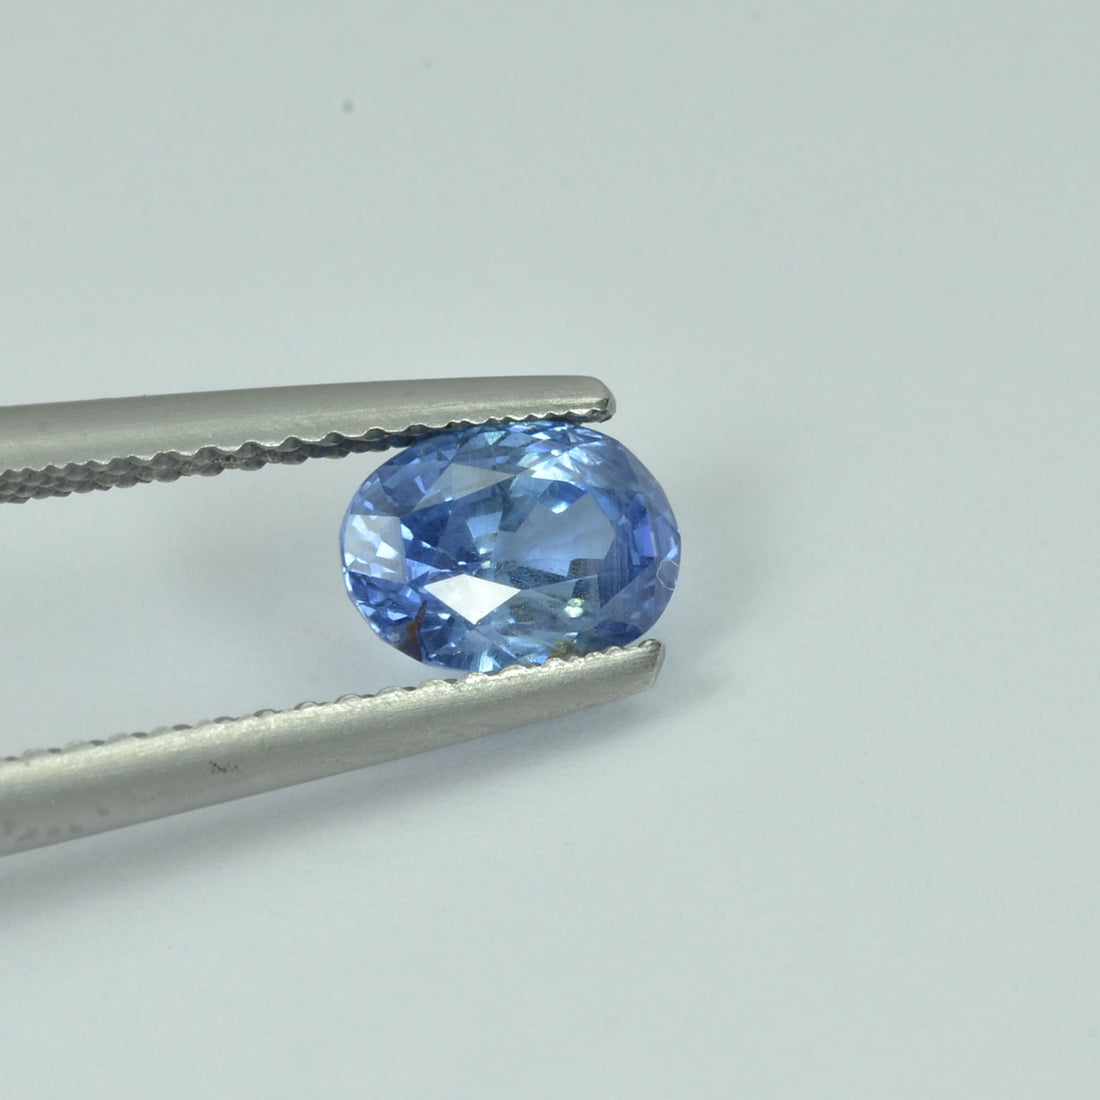 1.42 cts Natural Unheated Blue Sapphire Loose Gemstone Cushion Cut